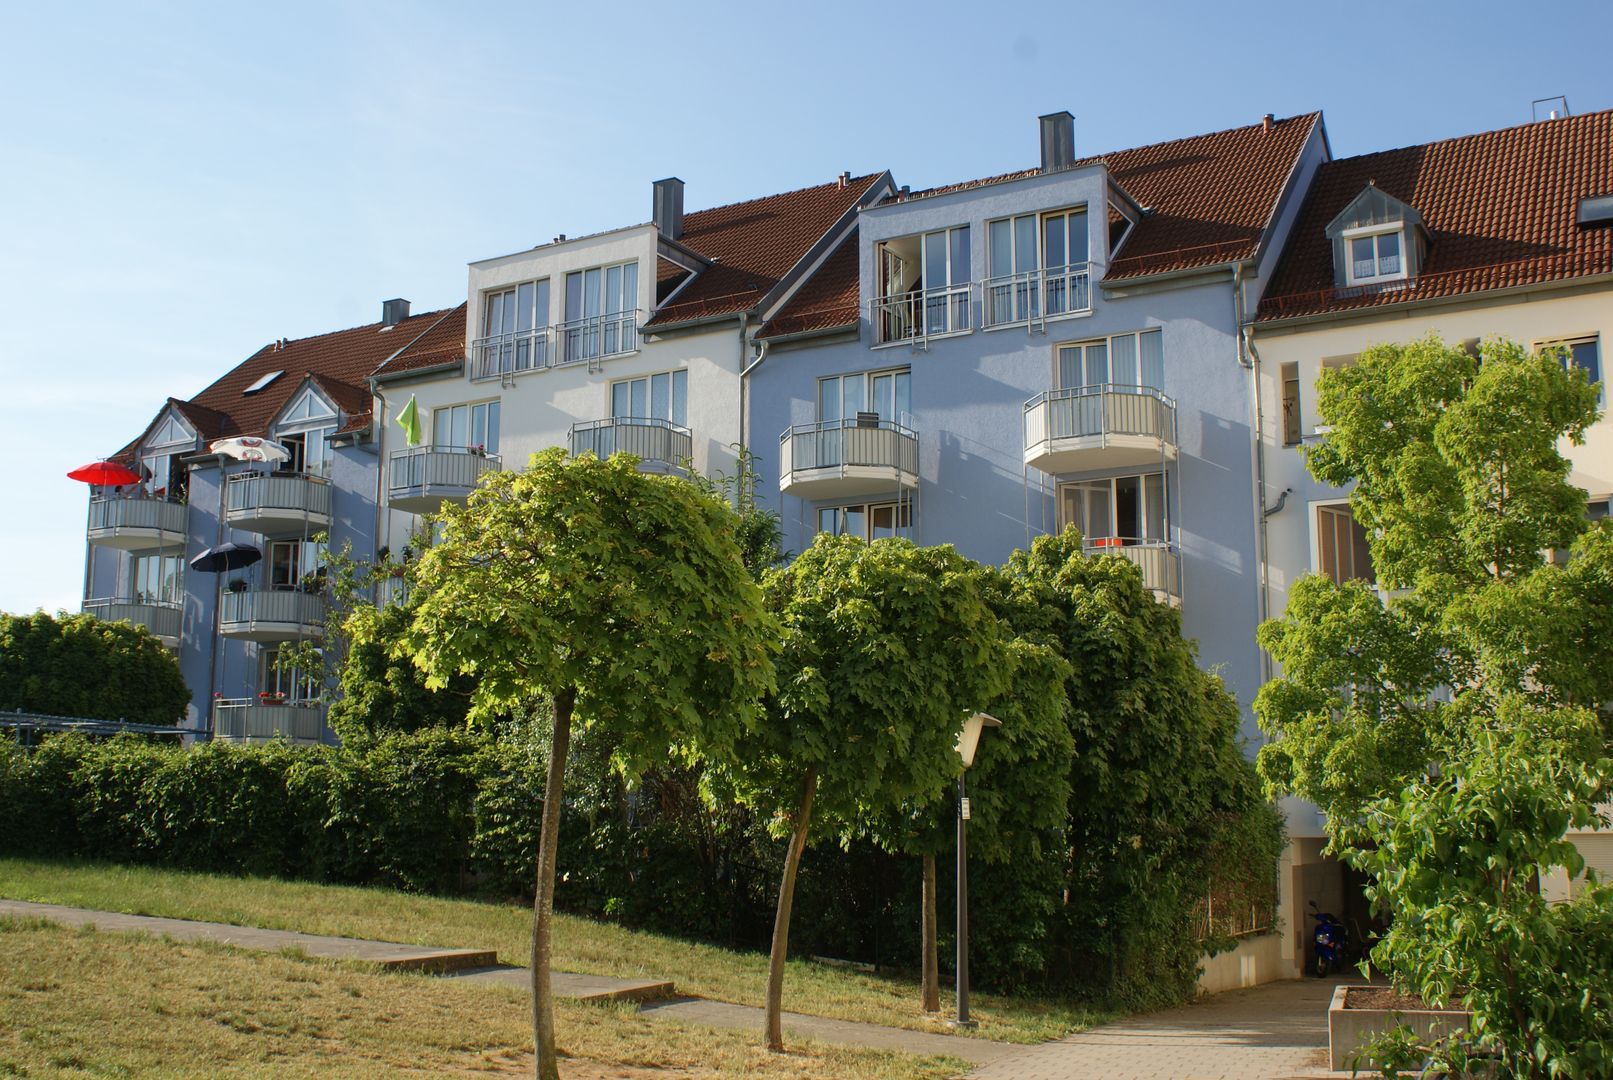 Fassadensanierung Regensburg , farben schiller farben schiller Modern houses